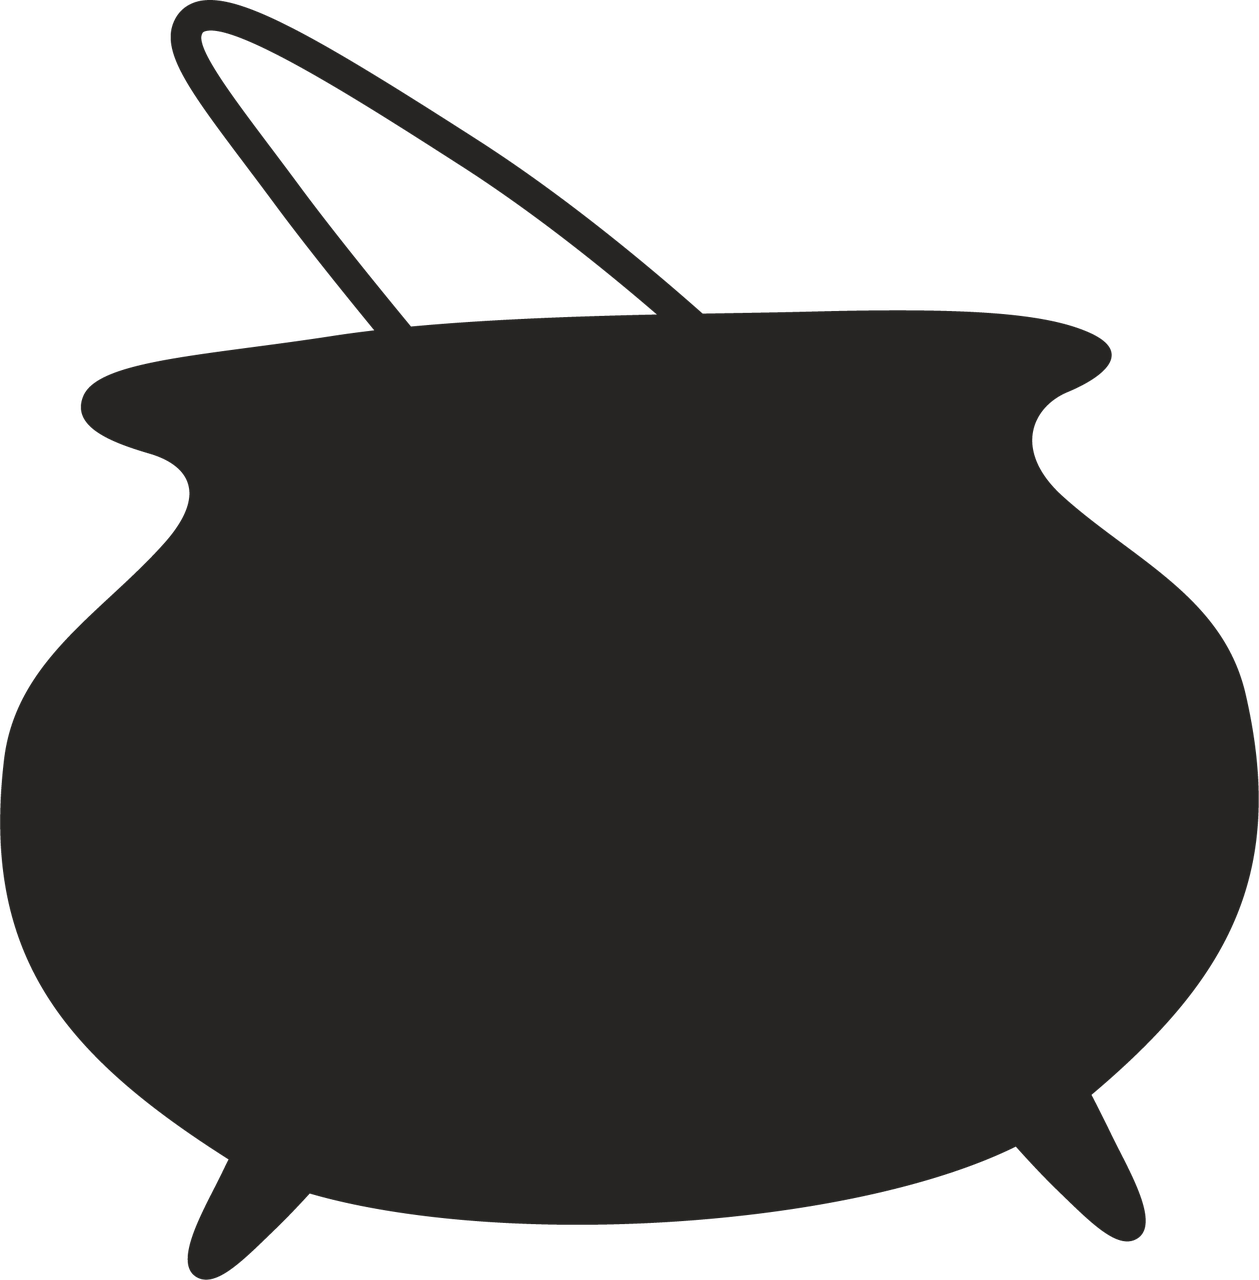 witch cauldron silhouette